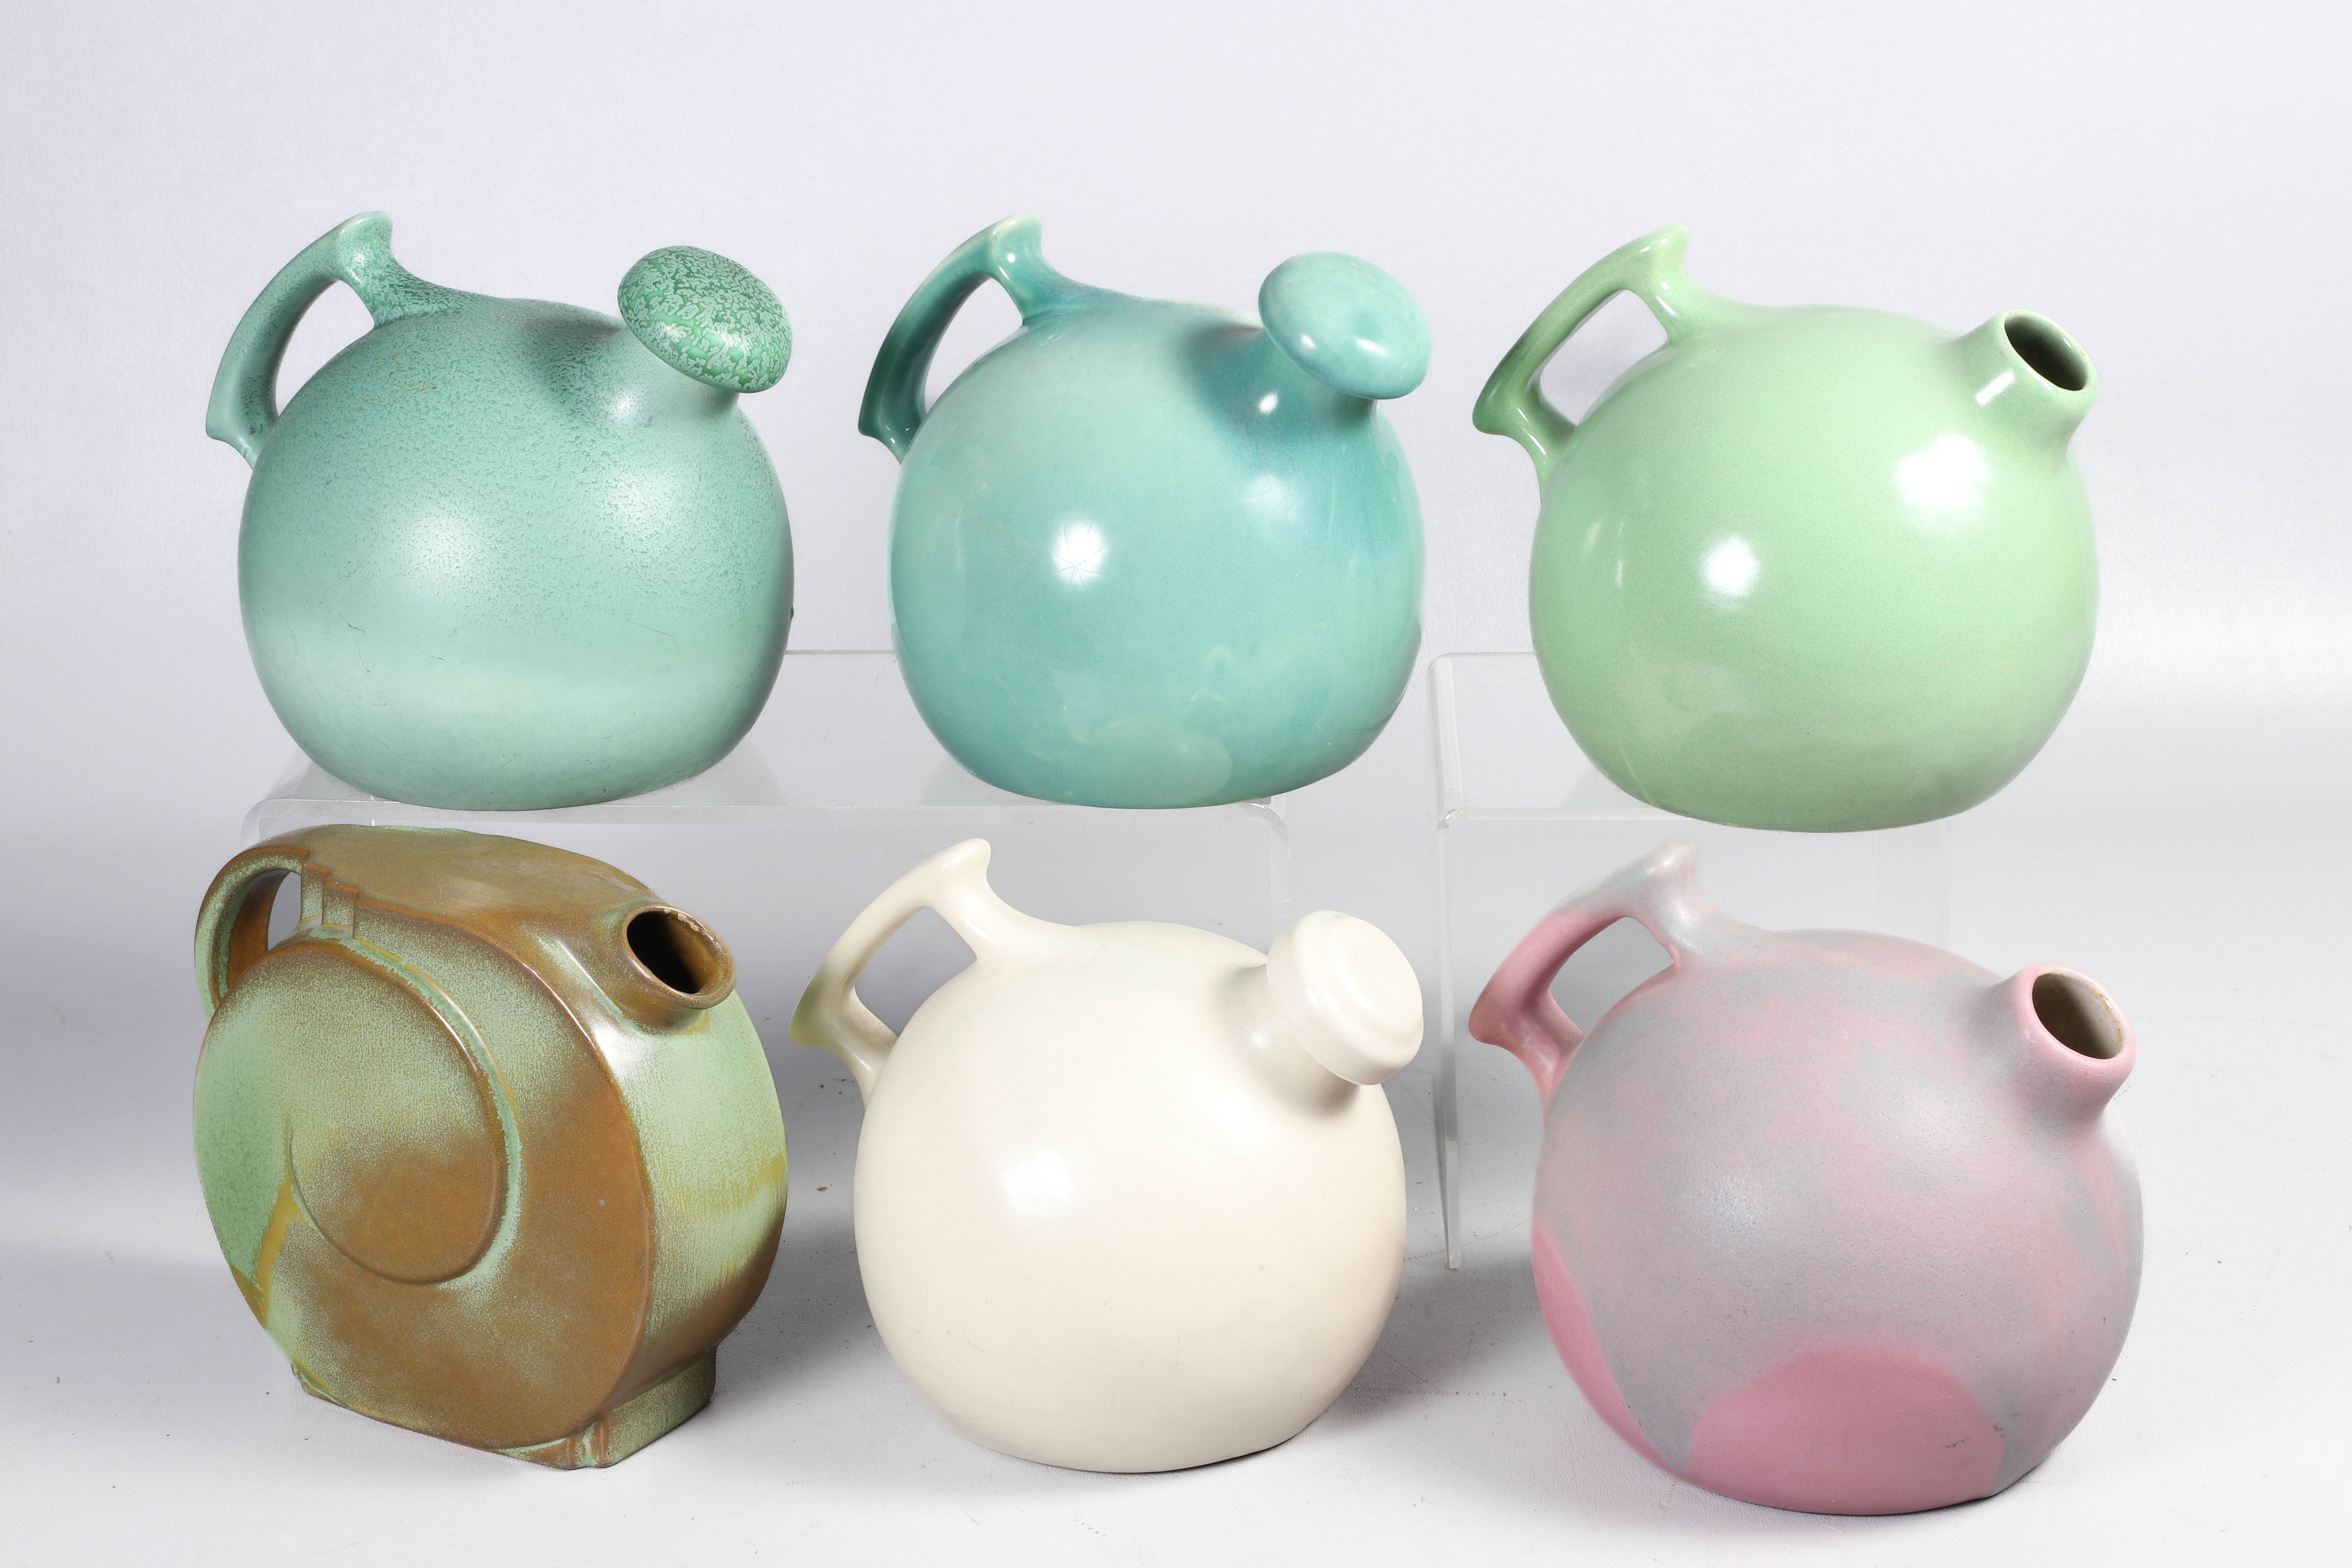  6 Pottery pitchers to include 2e1aa5